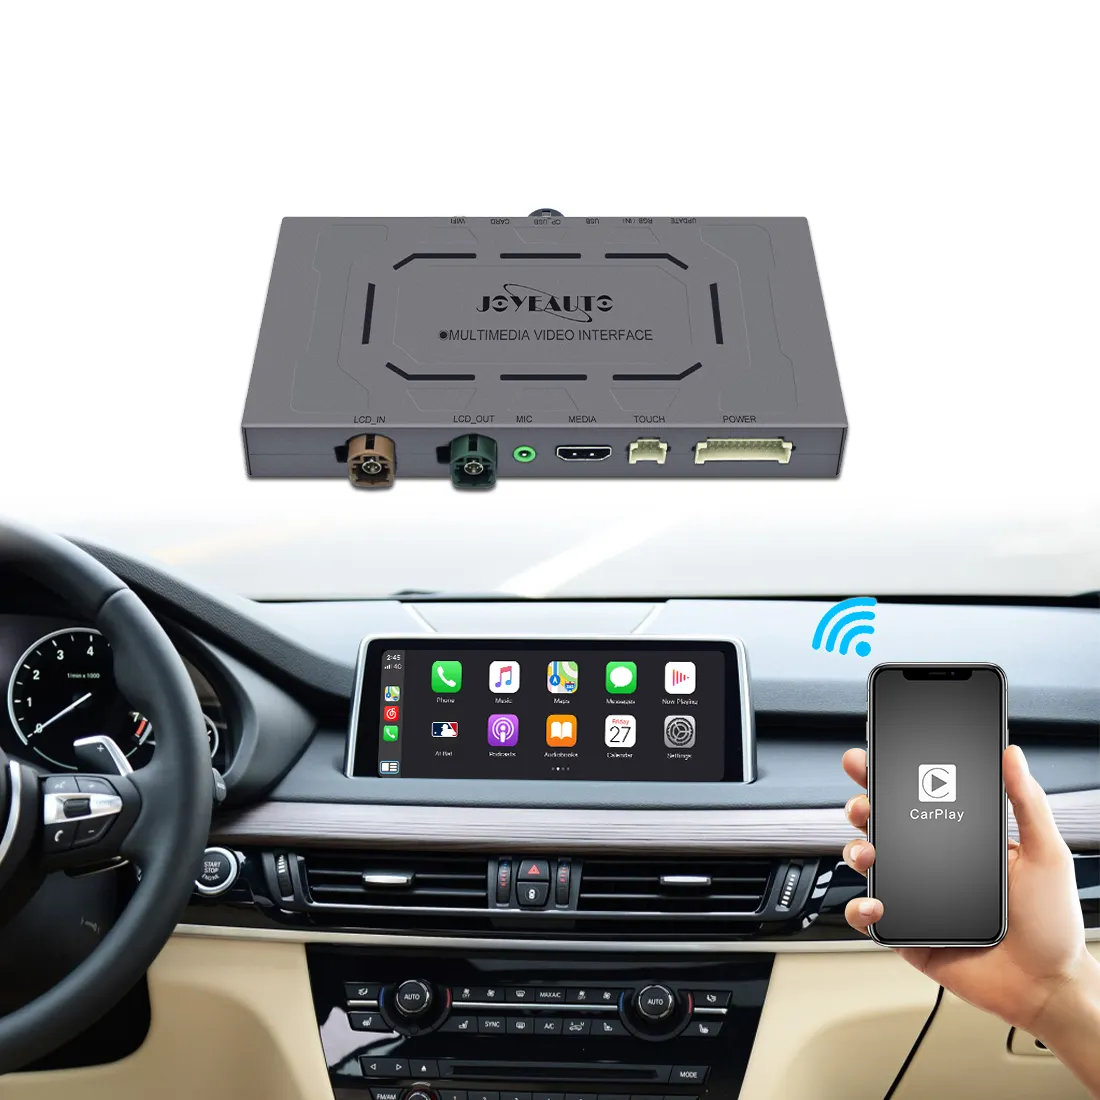 Joyeauto Aftermarket inalámbrico Apple Carplay Retrofit para BMW X1 F48 Usb 4K pantalla giratoria coche REPRODUCTOR DE Cd Dvd Chevy soporte CN;GUA